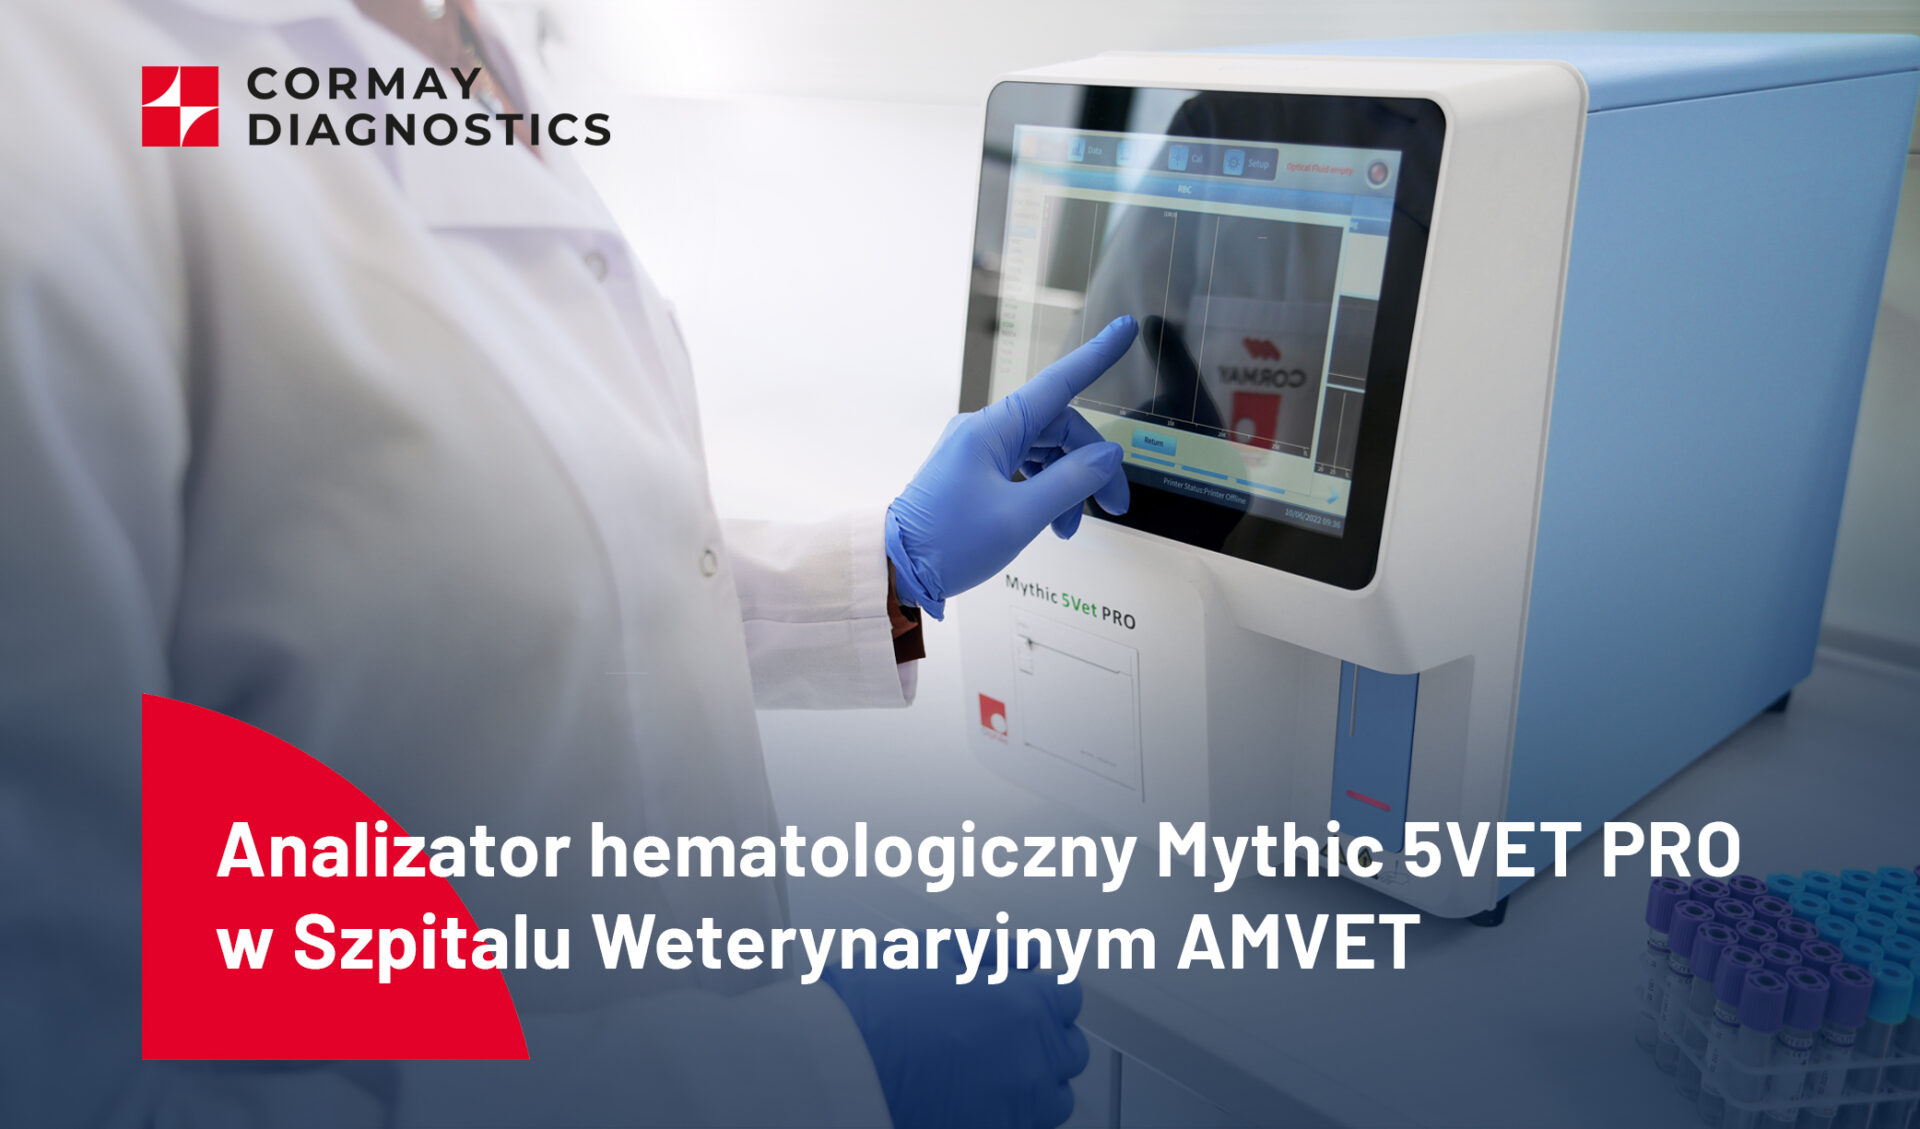 Analizator hematologiczny Mythic 5VET PRO w nowoczesnym Szpitalu Weterynaryjnym AMVET